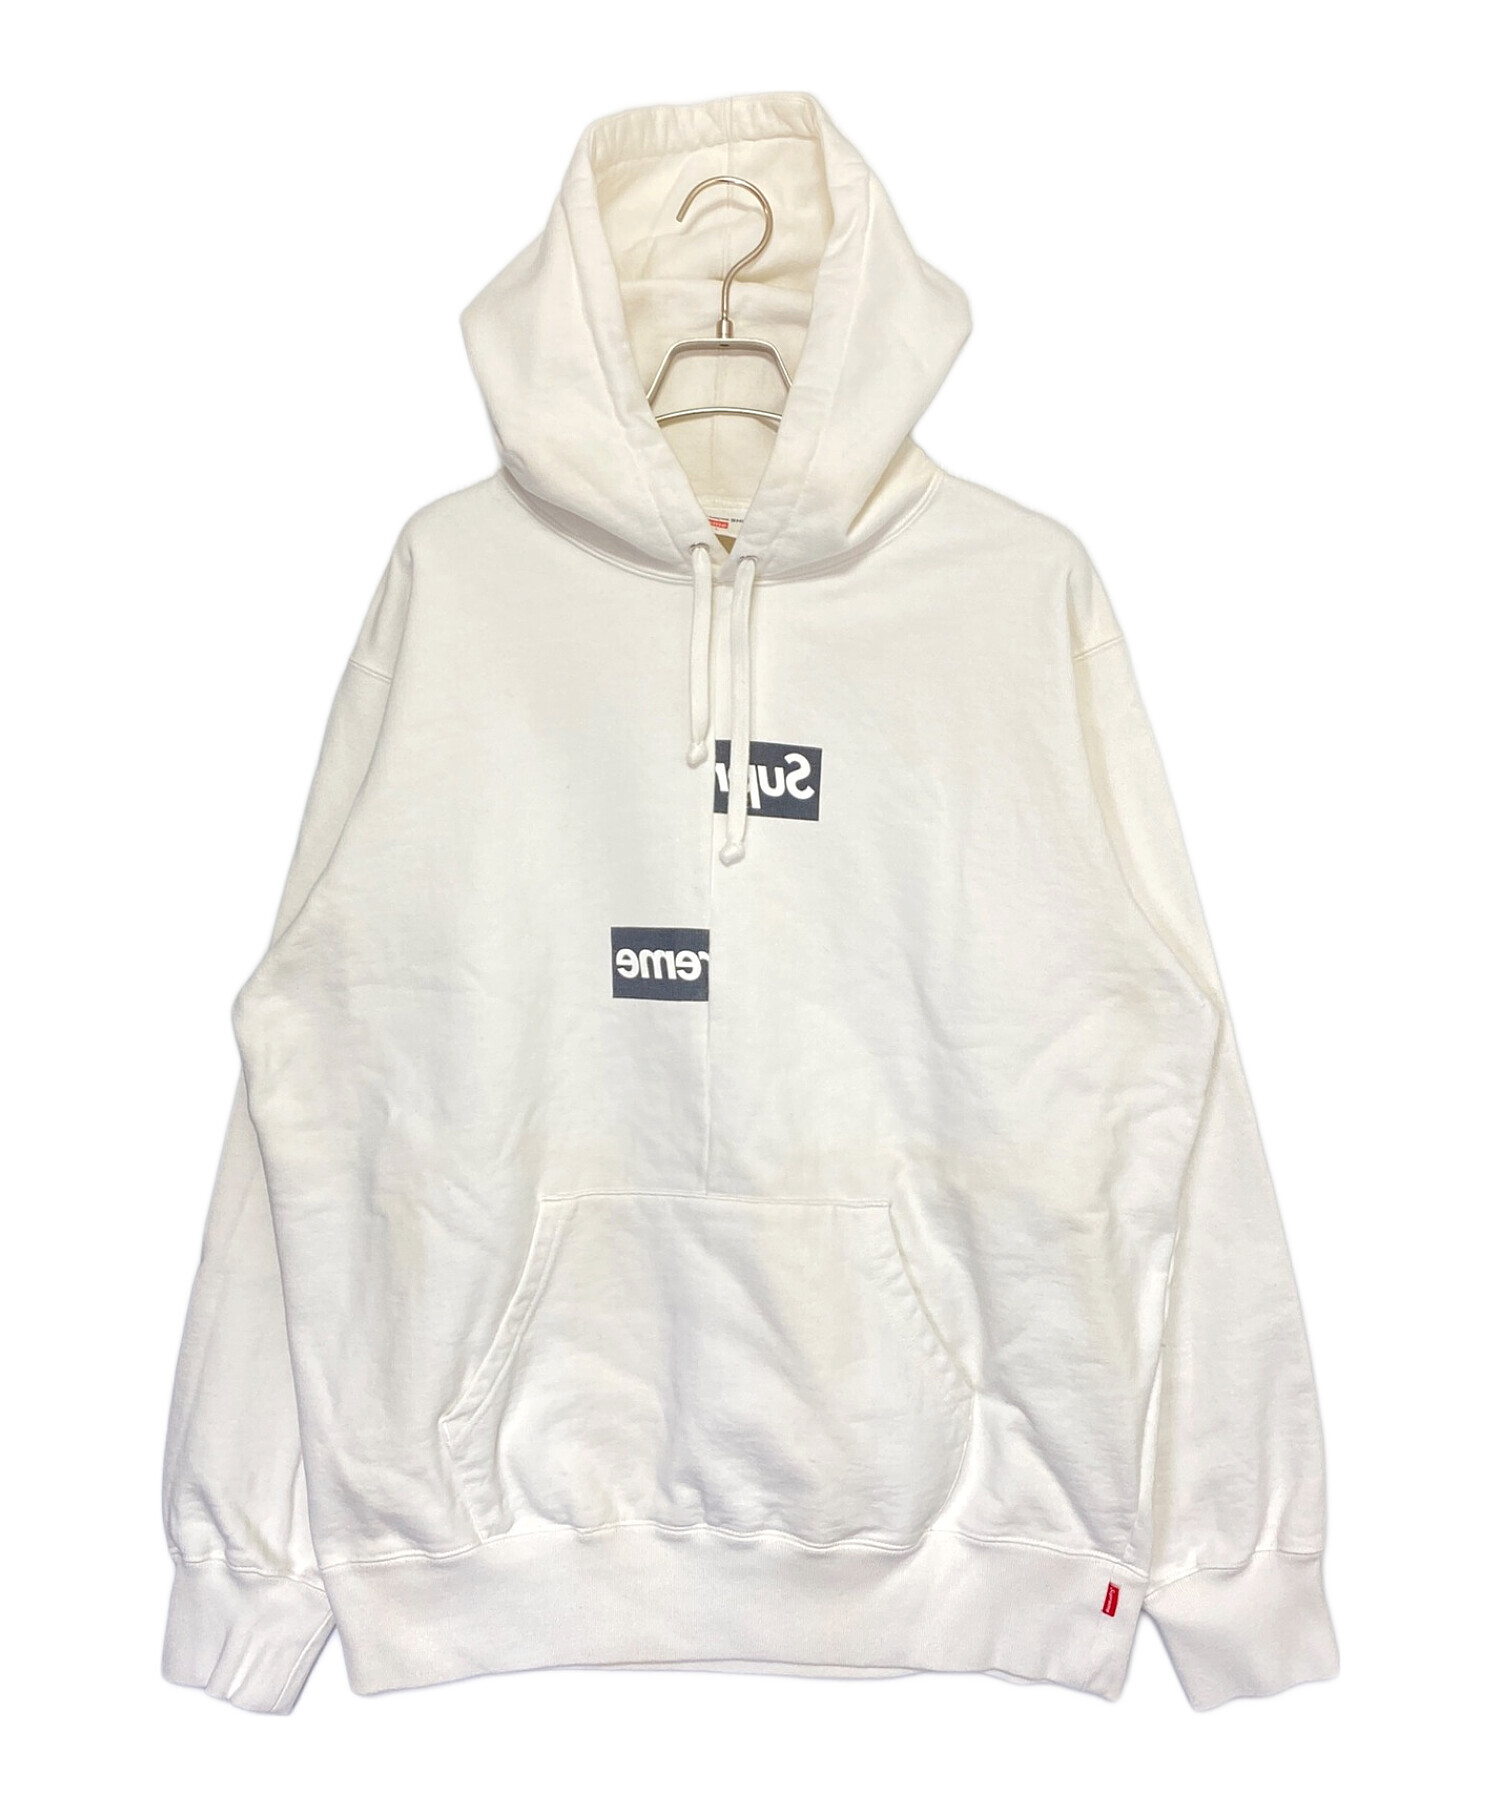 SUPREME (シュプリーム) COMME des GARCONS SHIRT (コムデギャルソンシャツ) Split Box Logo  Hooded Sweatshirt ホワイト サイズ:L